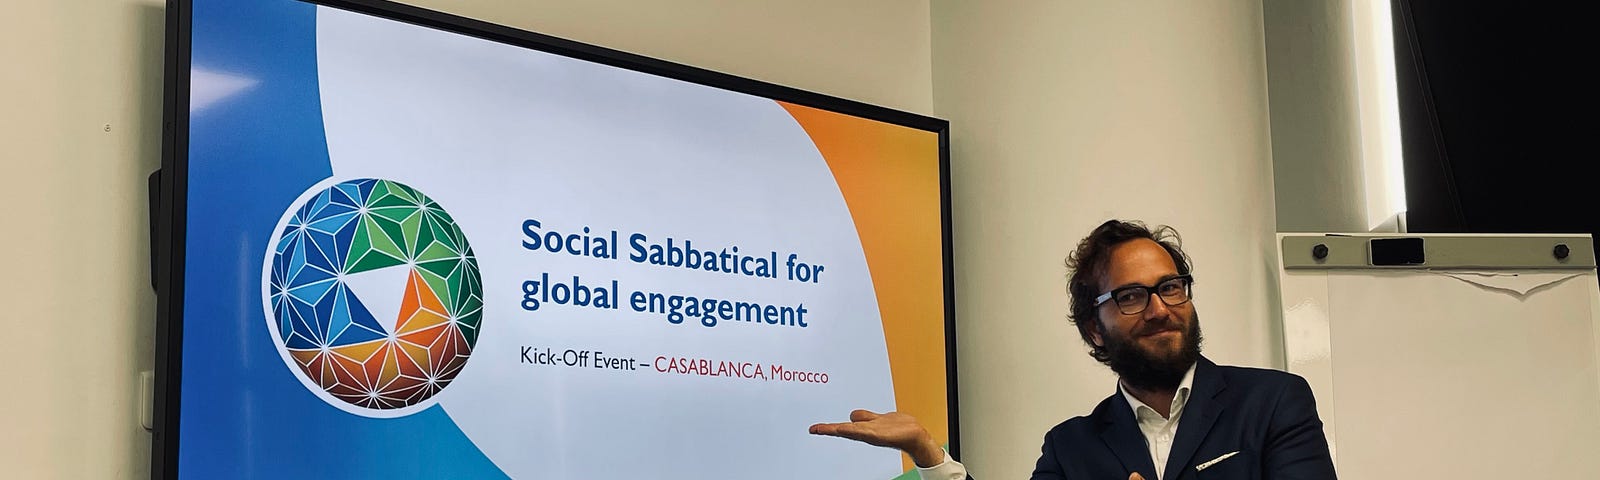 Angel Spasov SAP SoSa to host organization in SAP Morocco Office